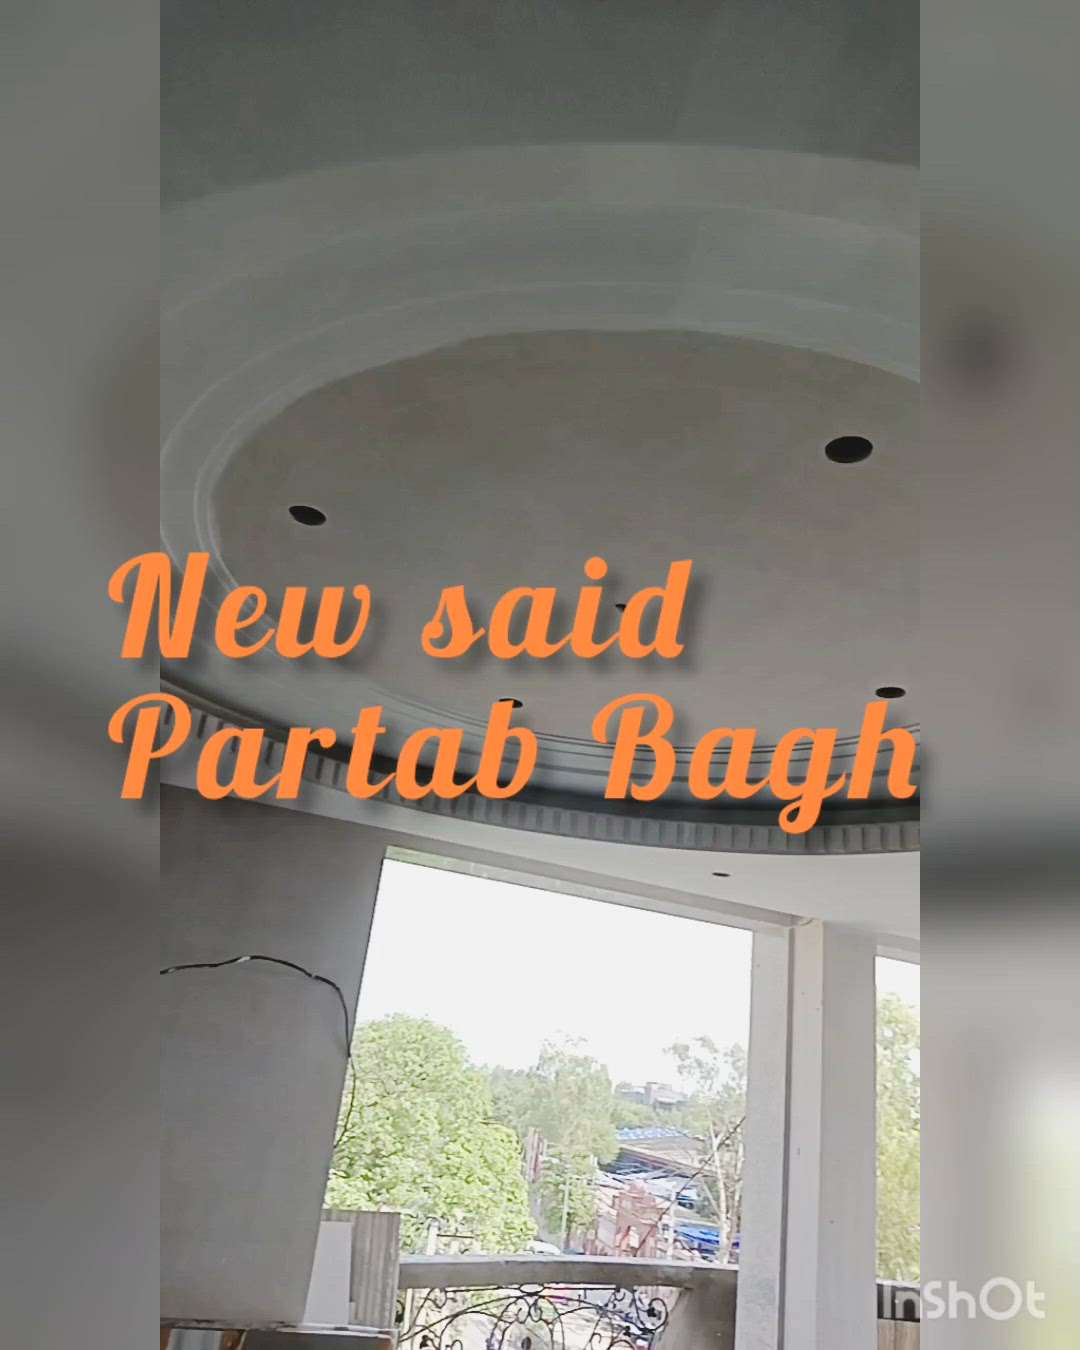 new said
partab bhag
paint polish work